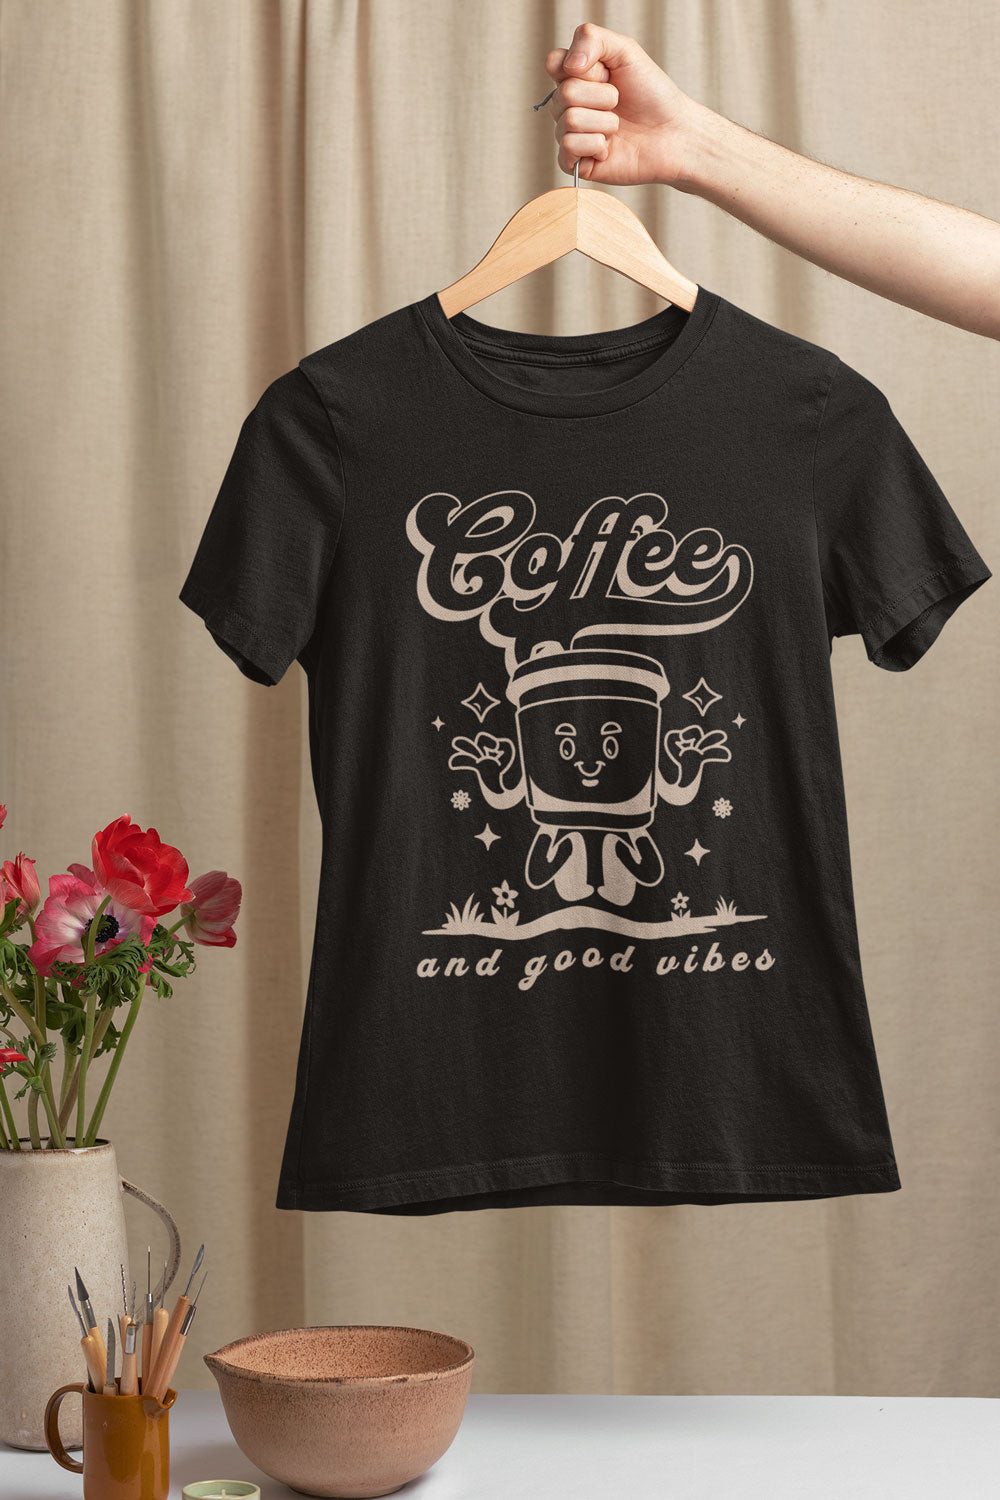 cool t-shirts Australia, coffee